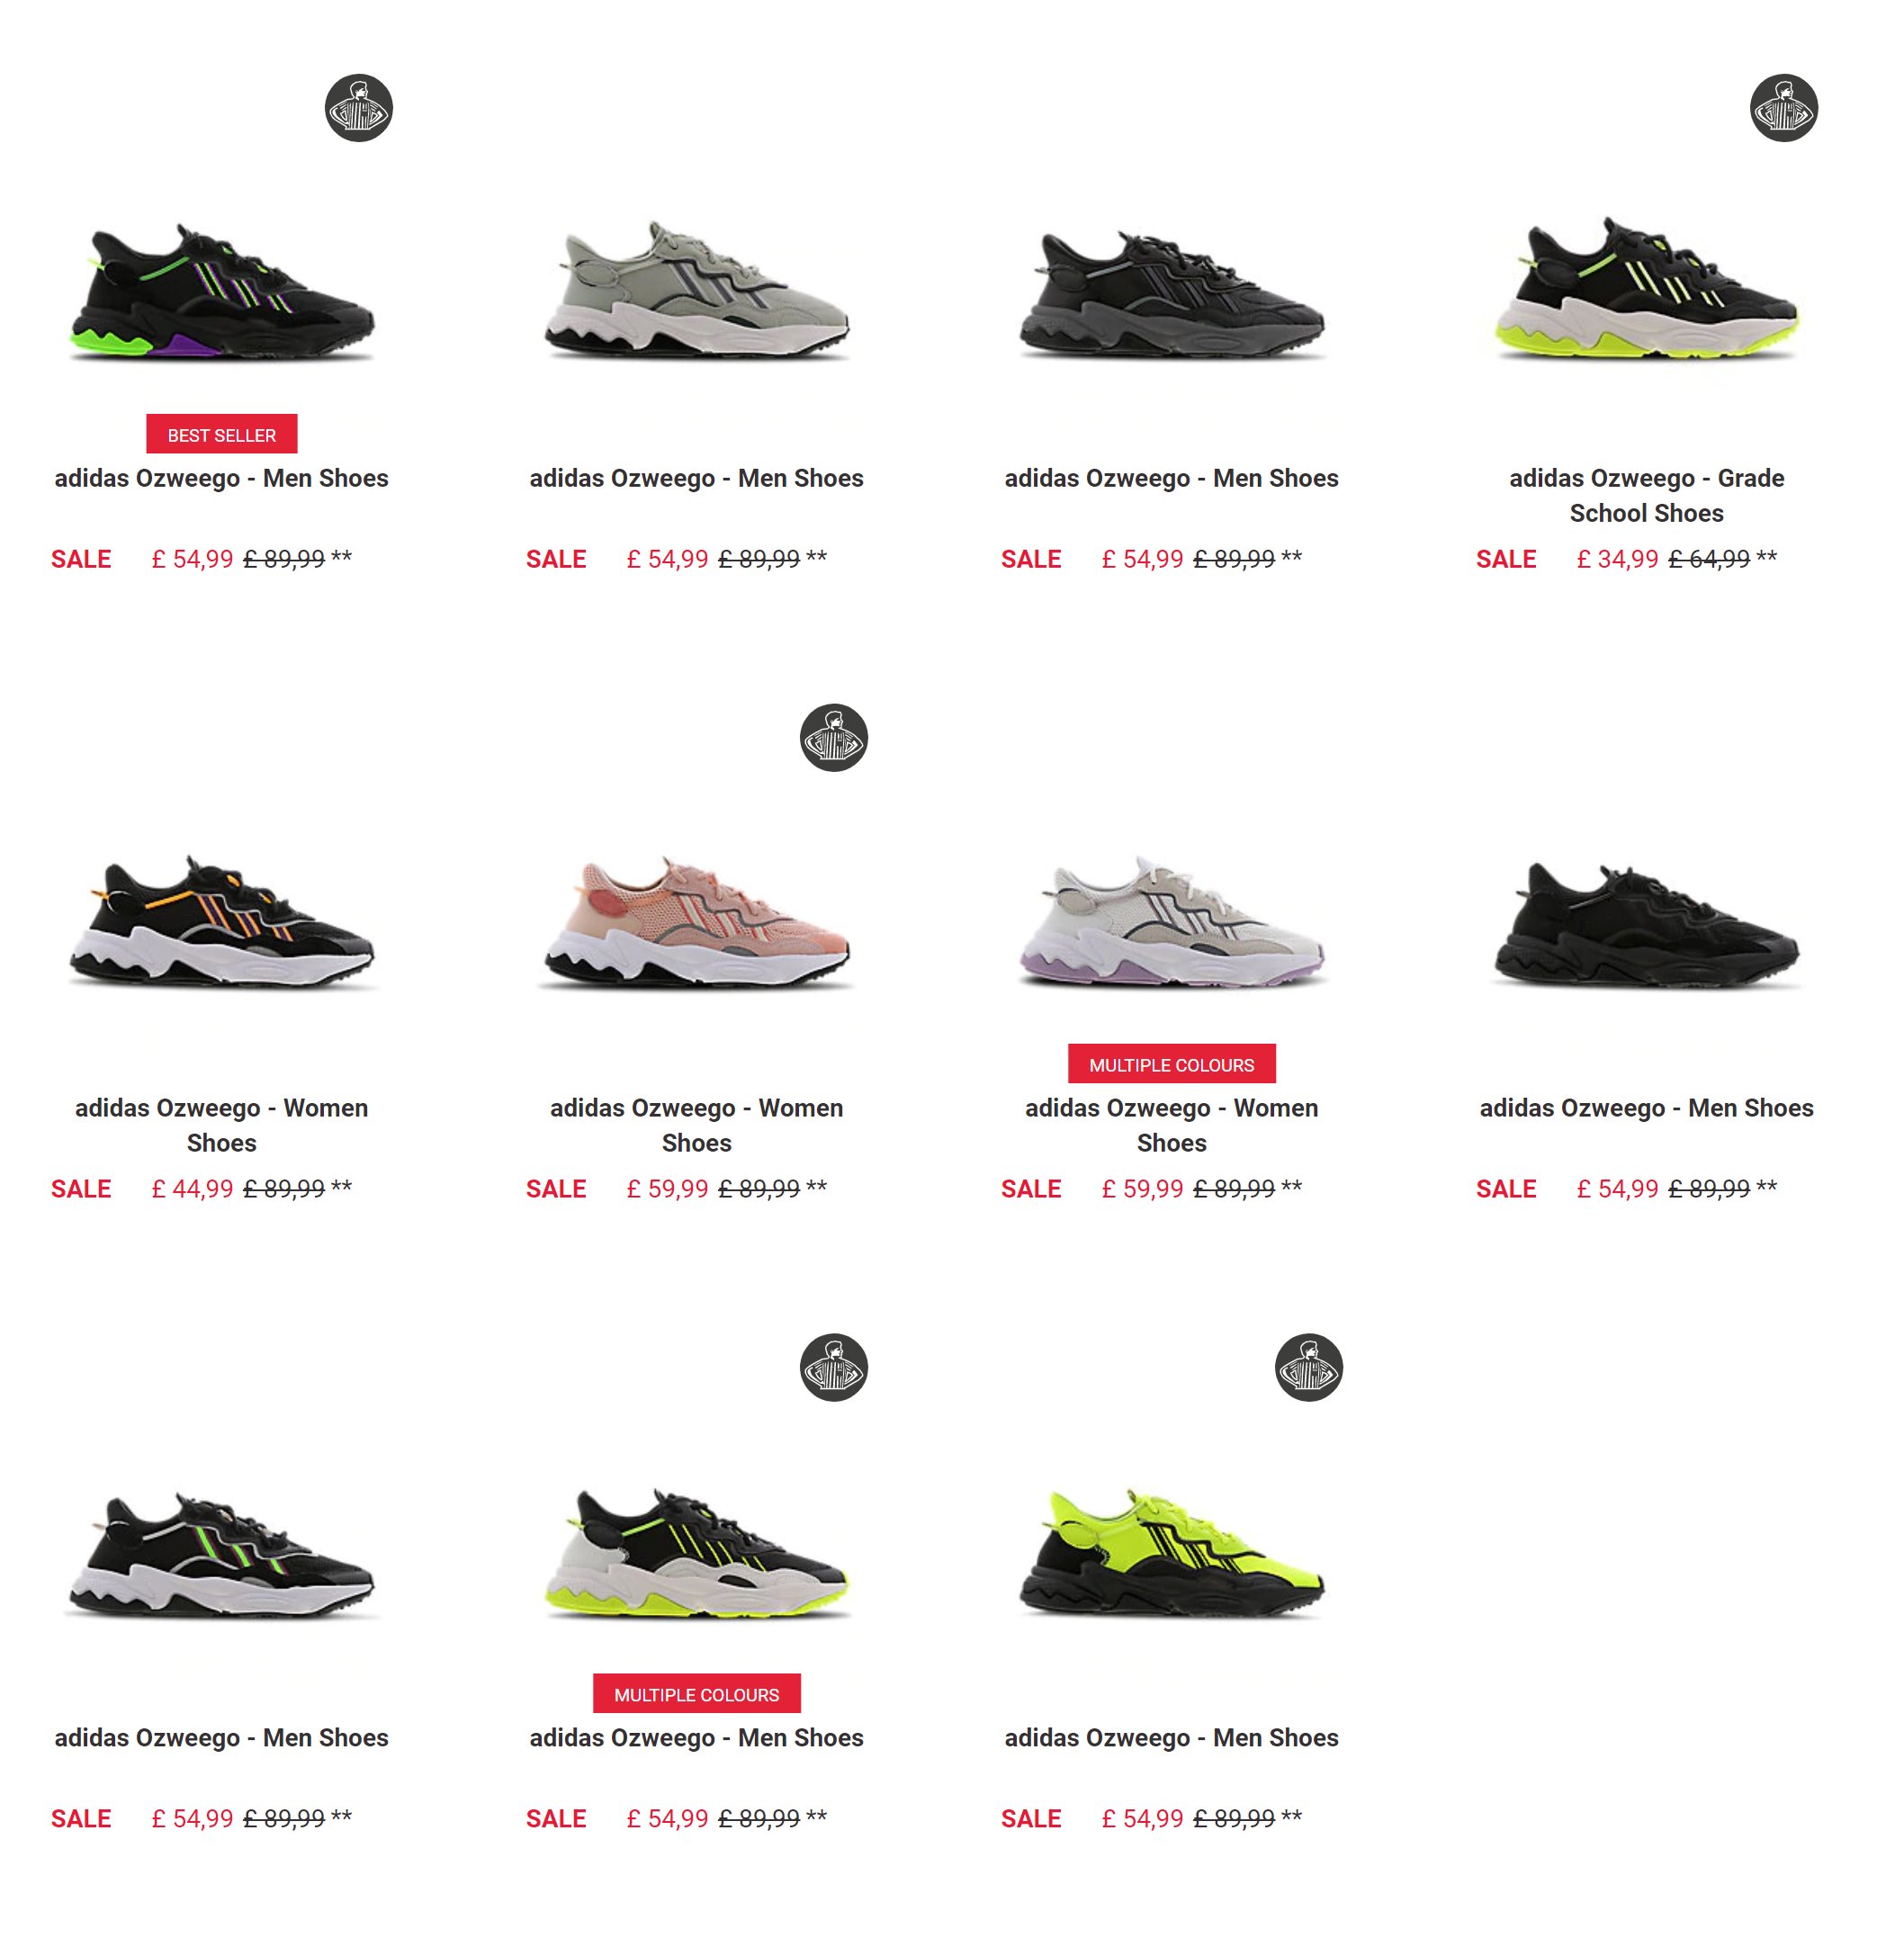 MoreSneakers.com on "EU ONLY: adidas Originals Ozweego available on sale via Footlocker EU FR:https://t.co/0nF05i82vH UK:https://t.co/96yFwZGWRt NL:https://t.co/A5TyZ0TVS8 https://t.co/1NaCODG0K2" /